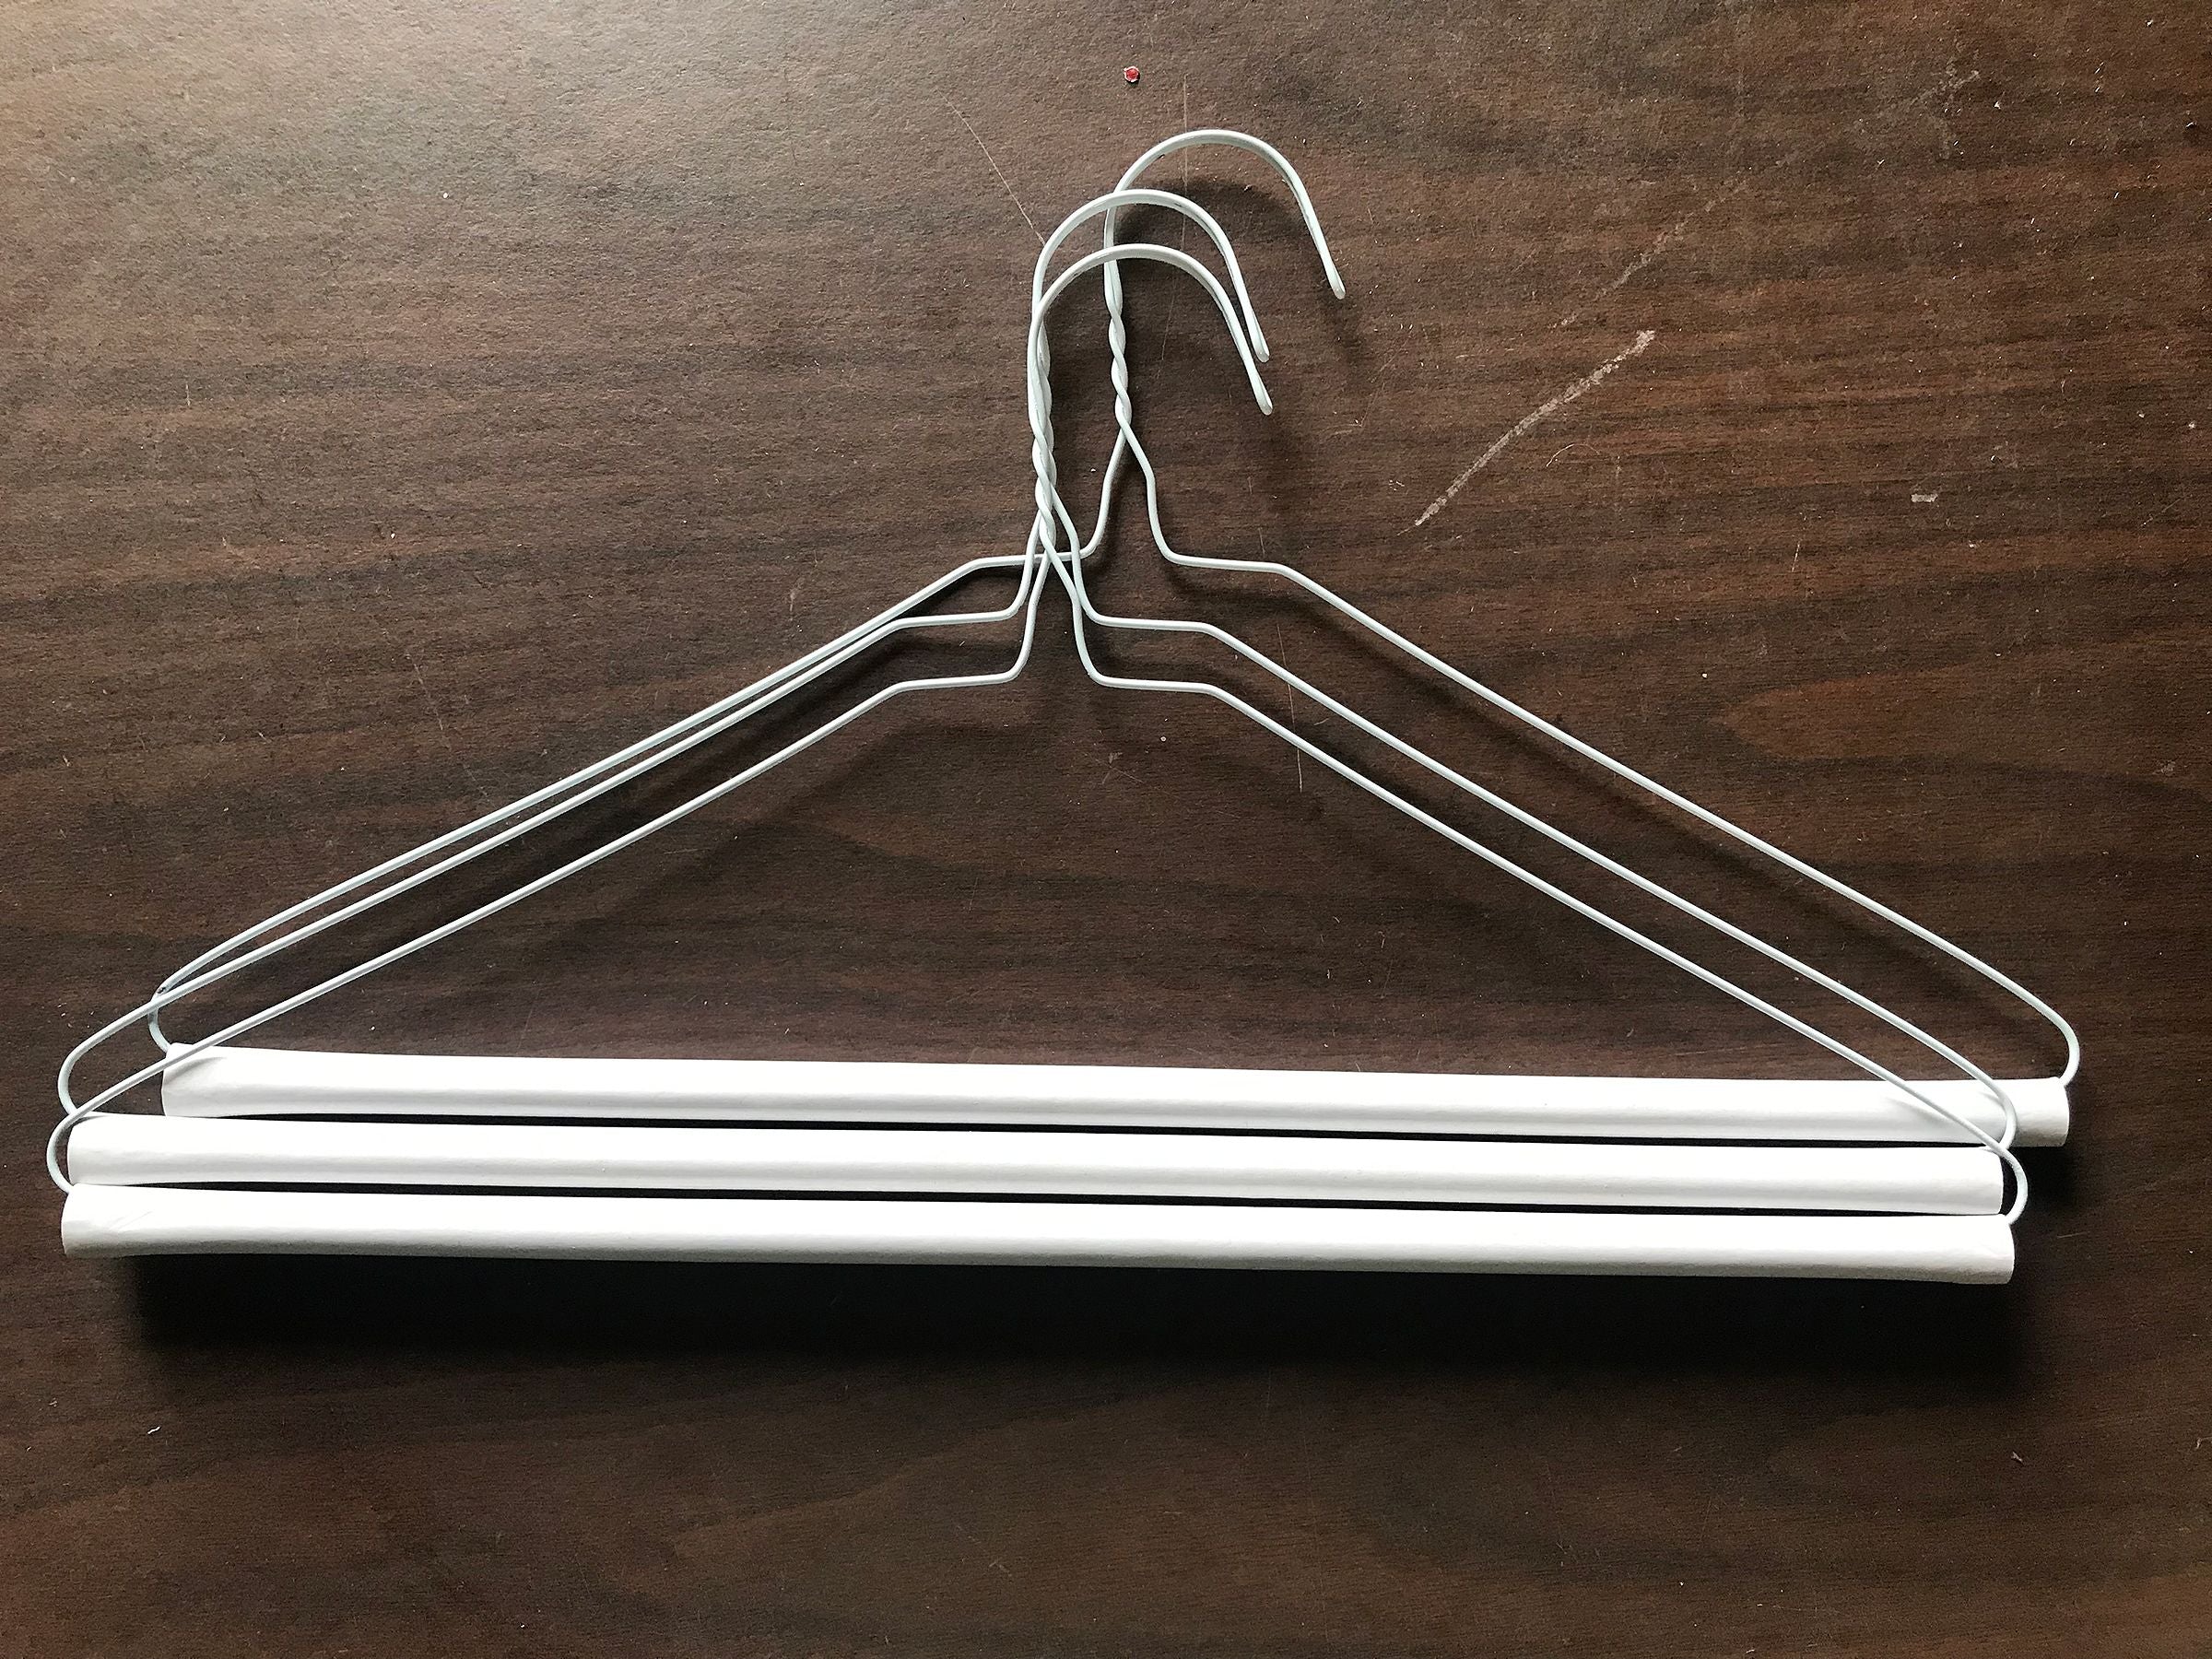 Shirt Wire Hangers 18 White 14.5 Gauge 500 Pcs